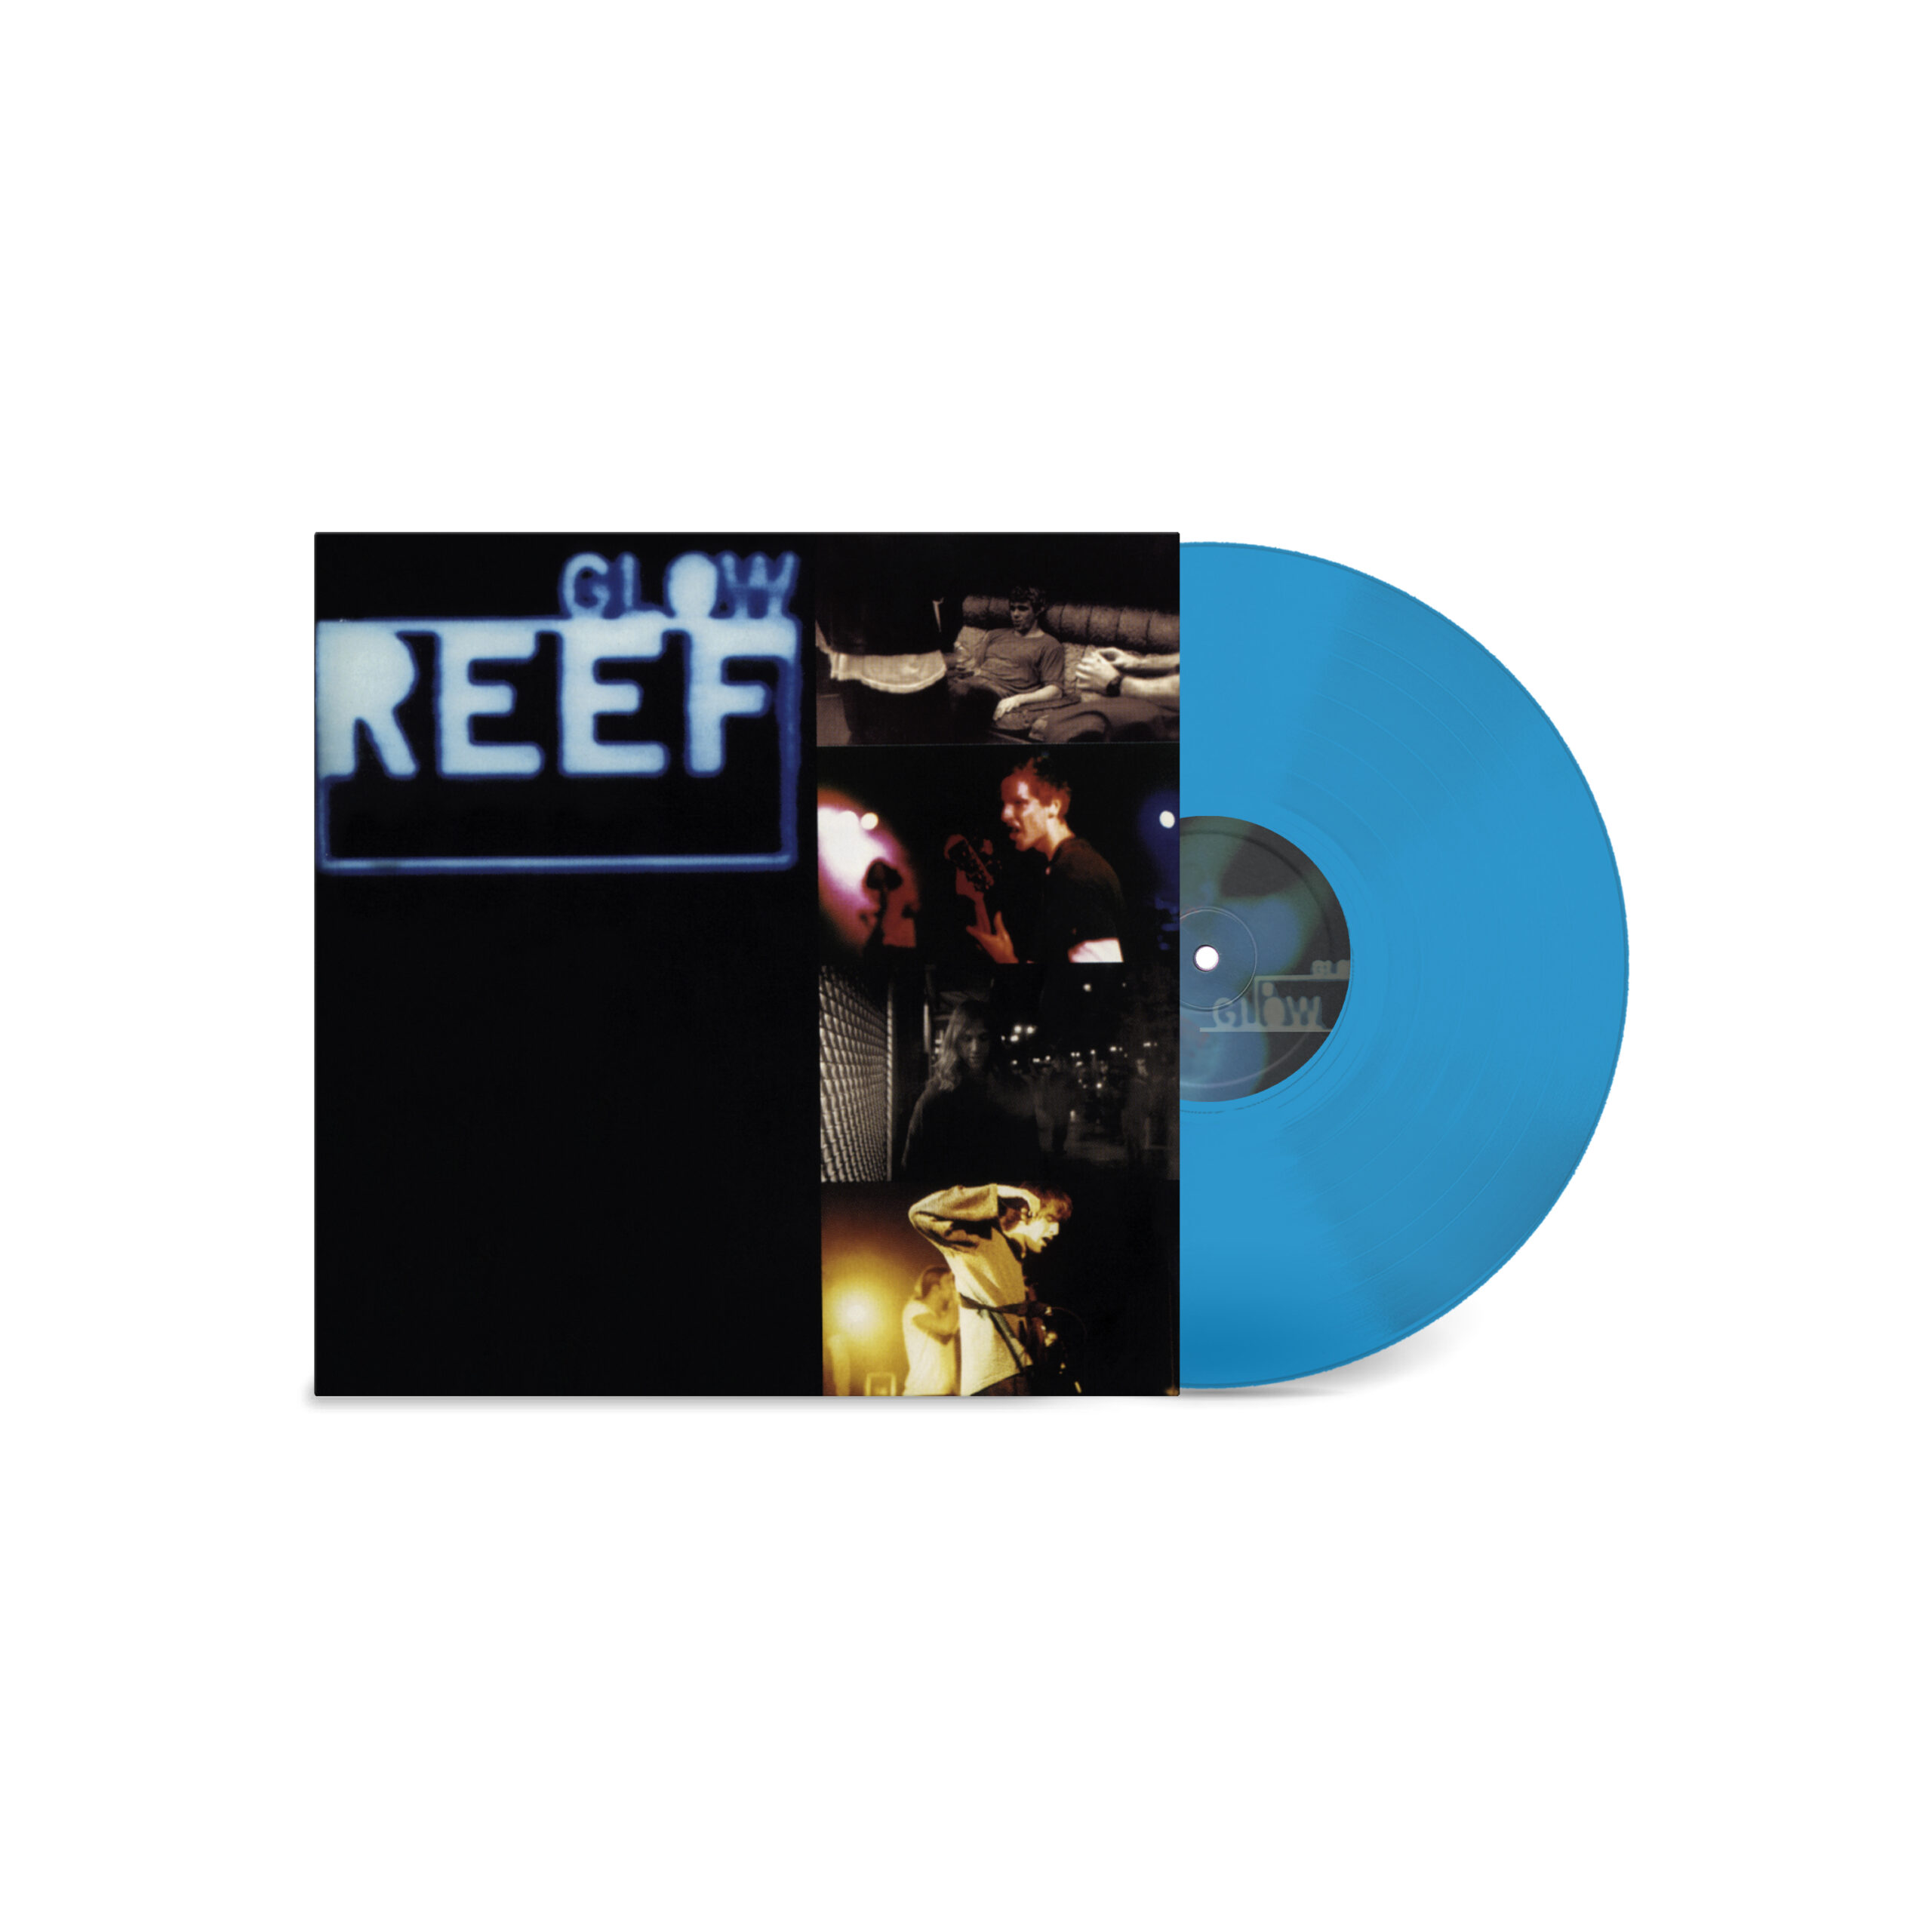 Reef – “Glow” 25th anniversary edition